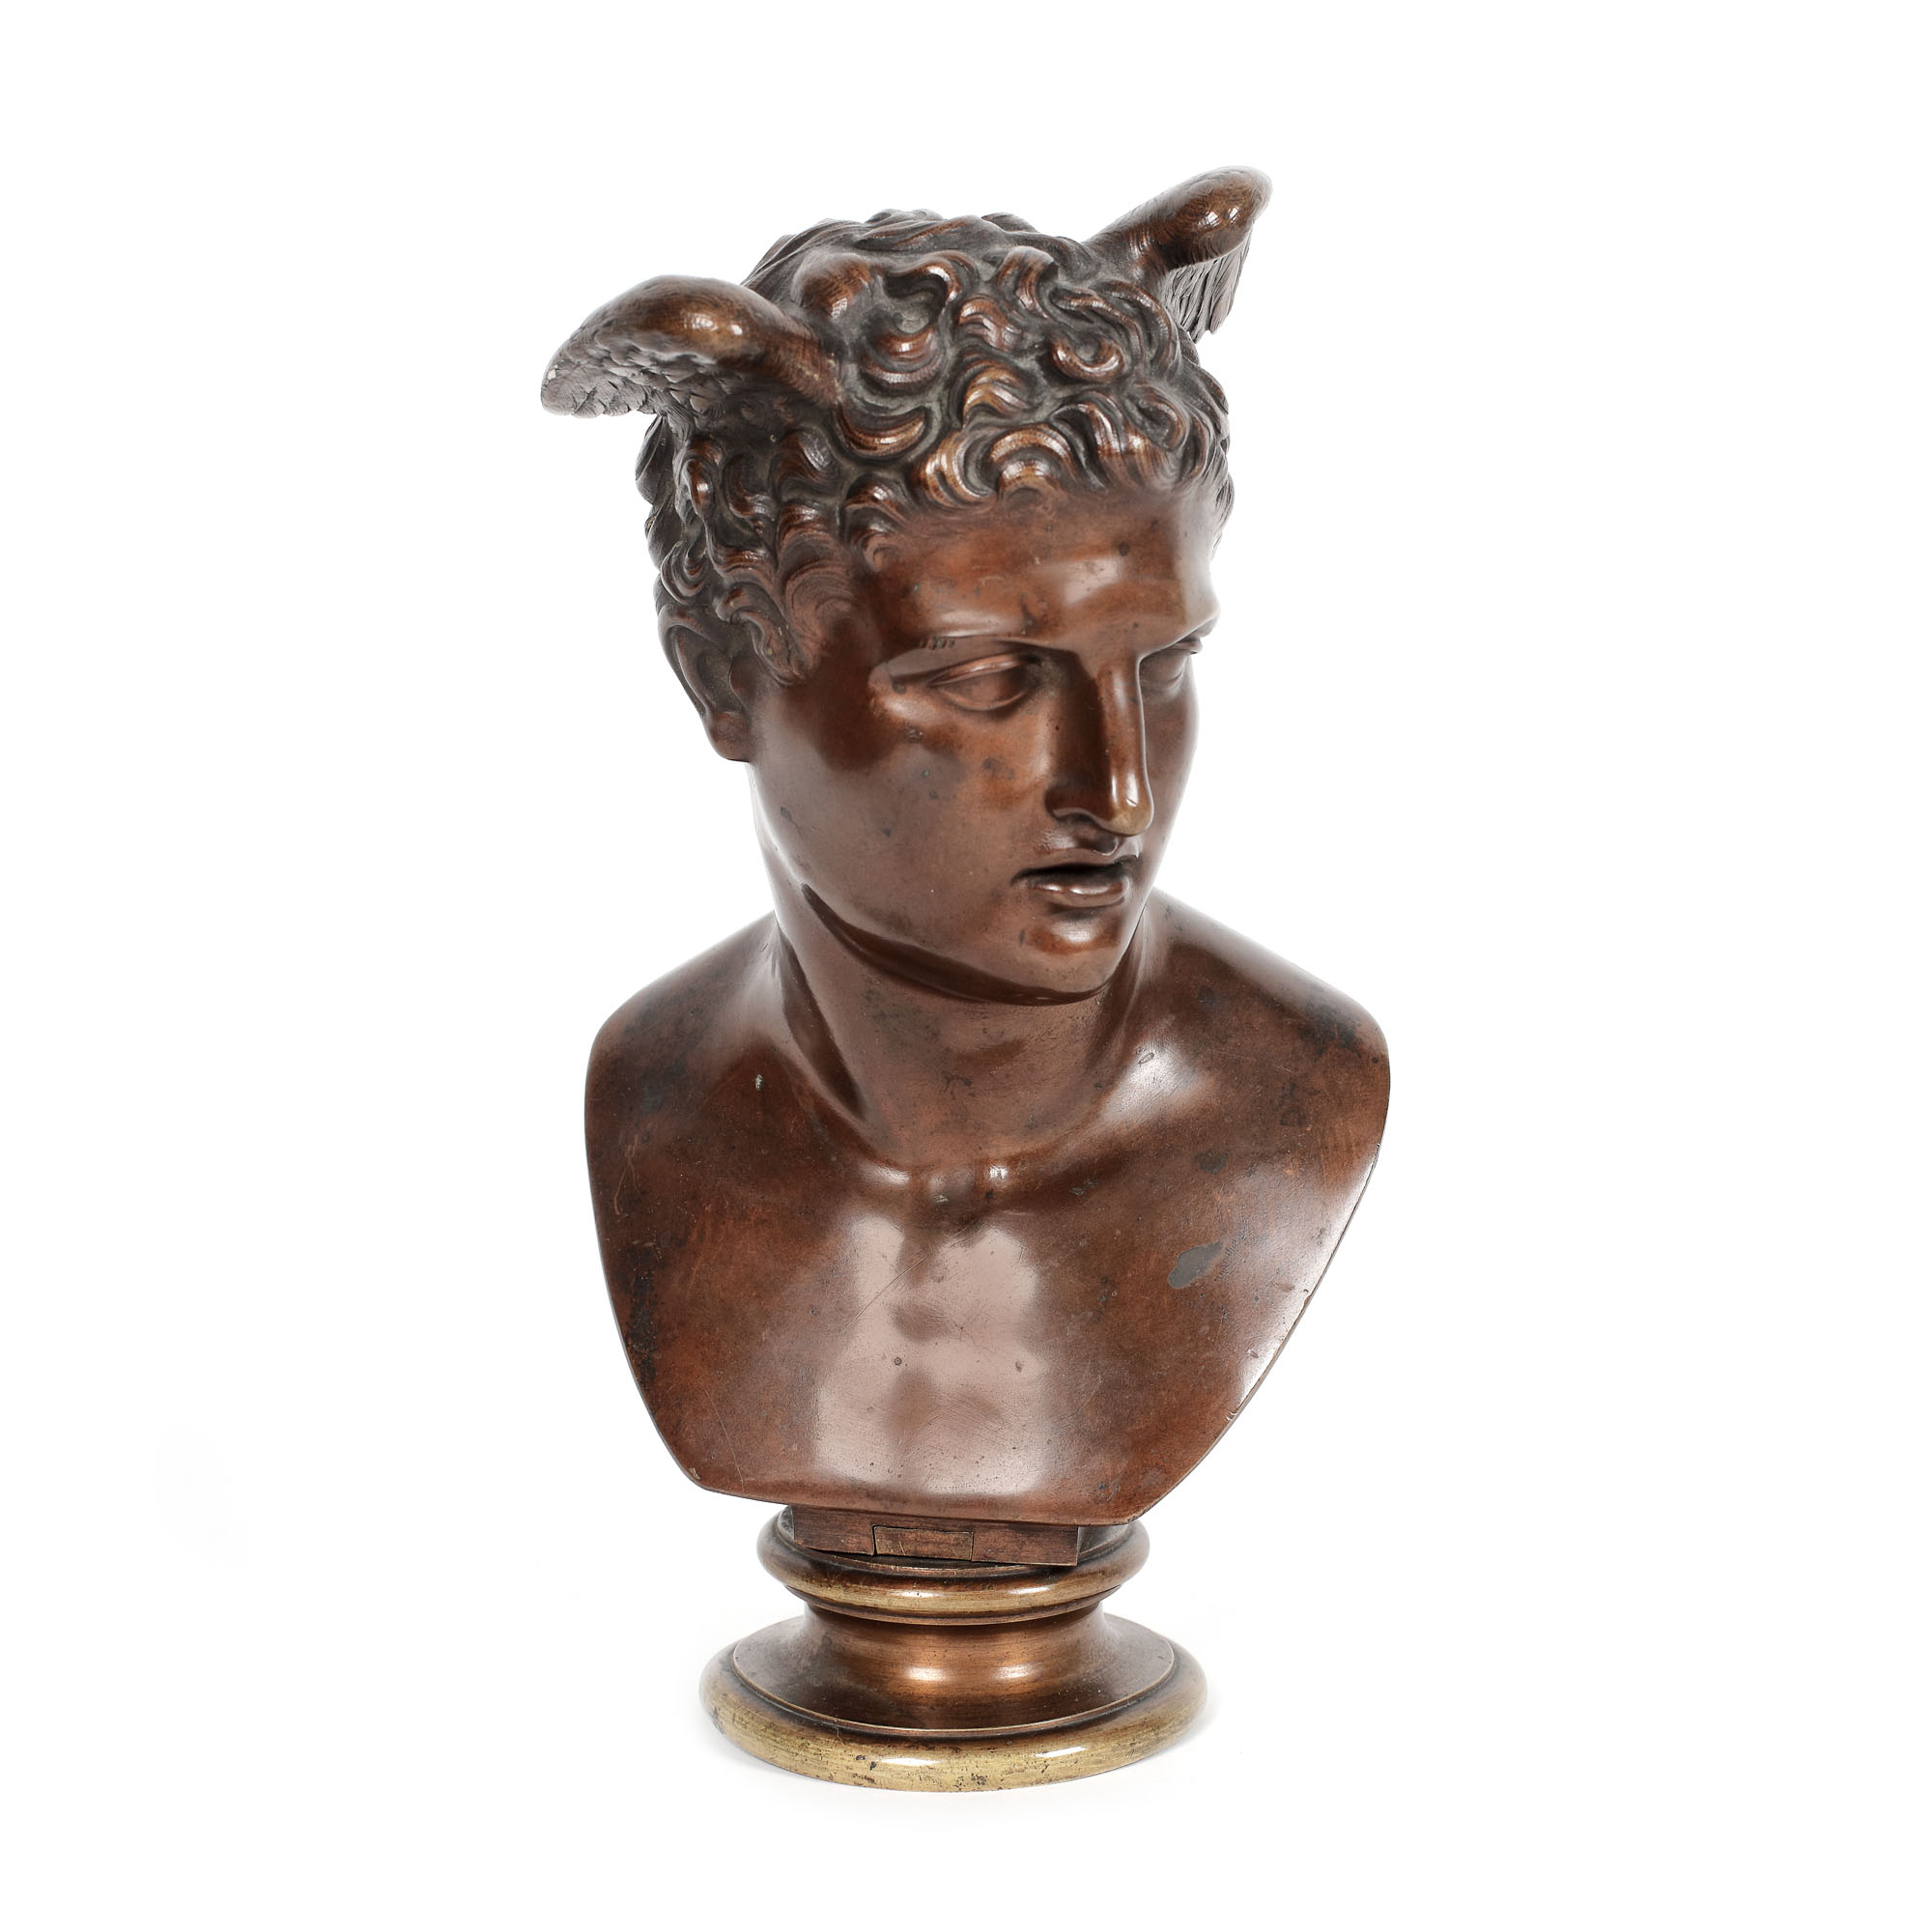 French workshop, Hermes - decorative bronze sculpture E. Jullien, second half of the 19th century